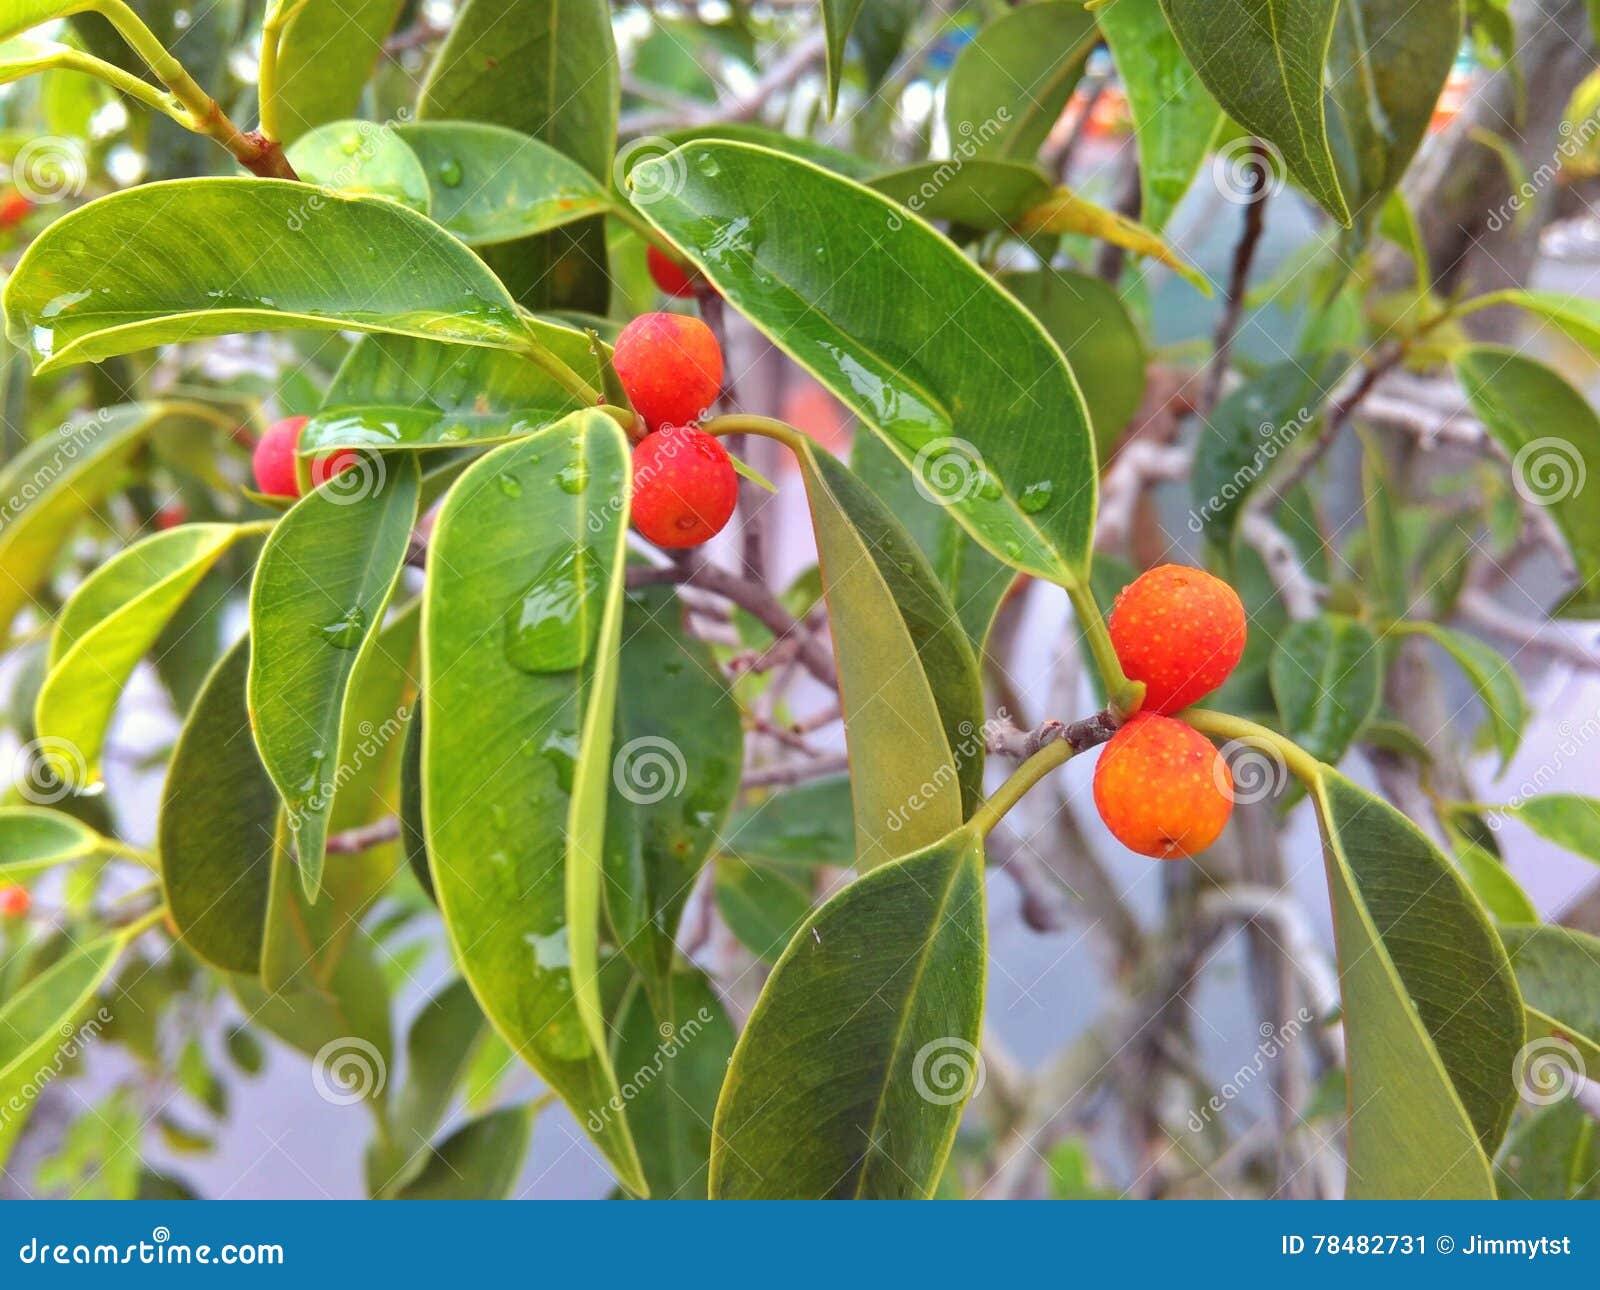 Ficus benjamina tree full of fruits youtubeyoutube